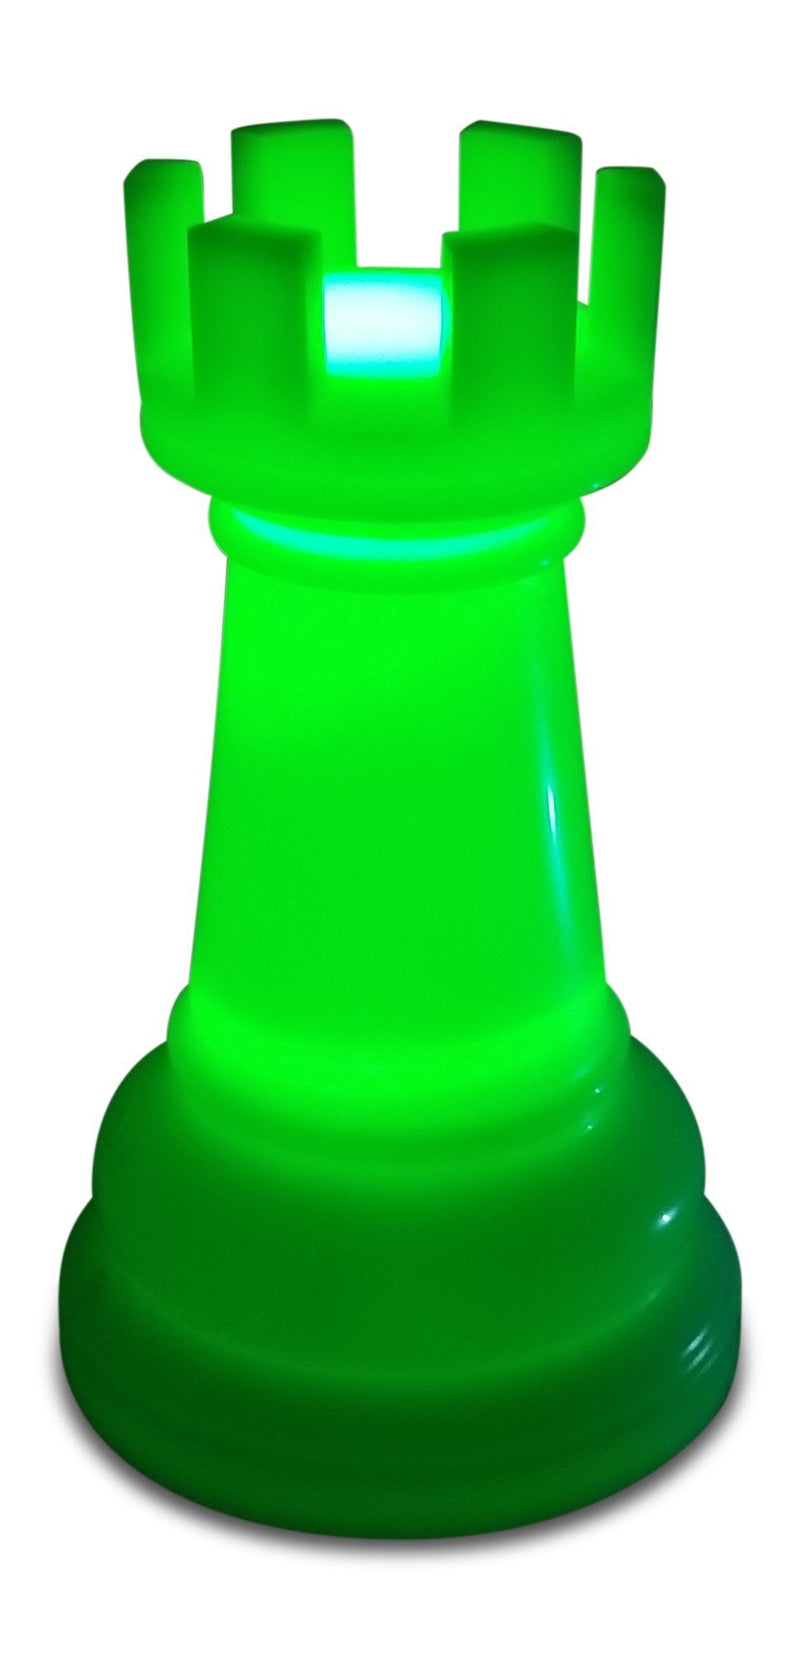 MegaChess 14 Inch Perfect Rook Light-Up Giant Chess Piece - Green |  | MegaChess.com